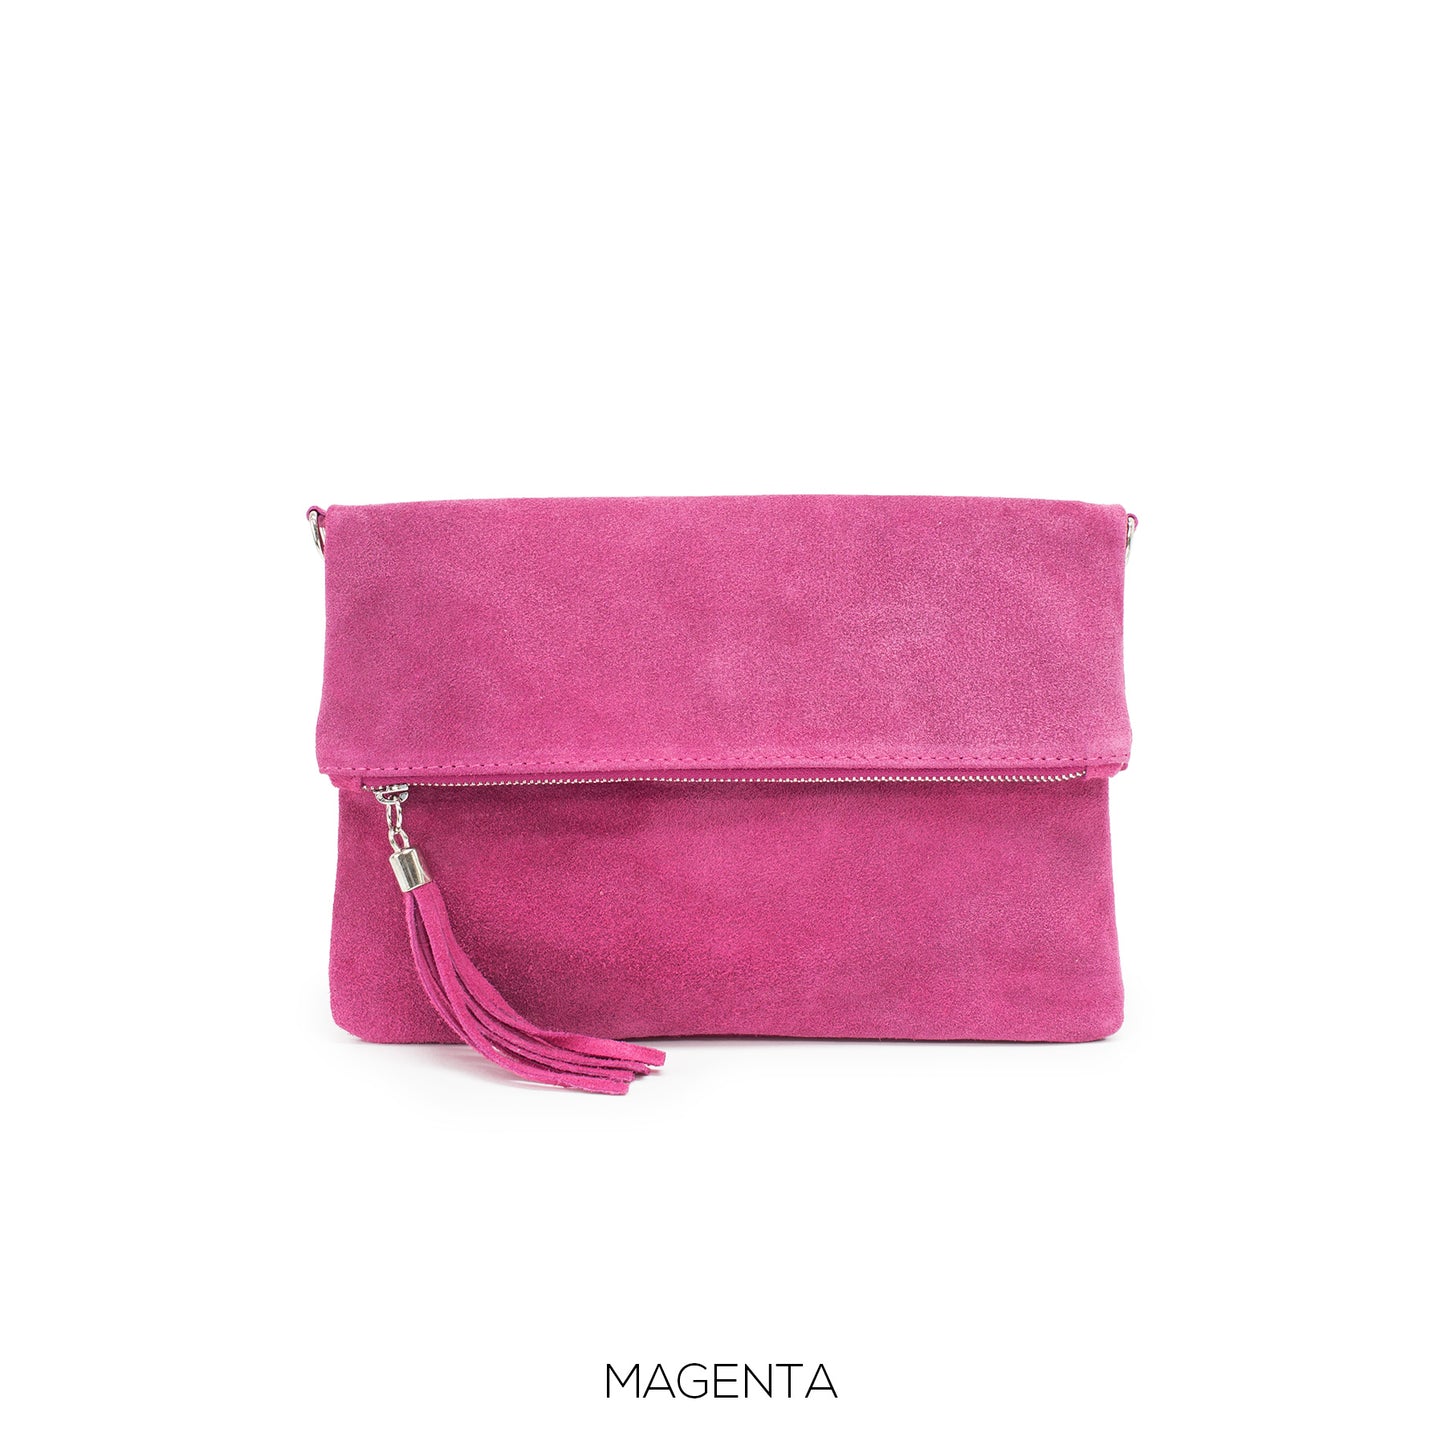 Magenta Suede Clutch Bag